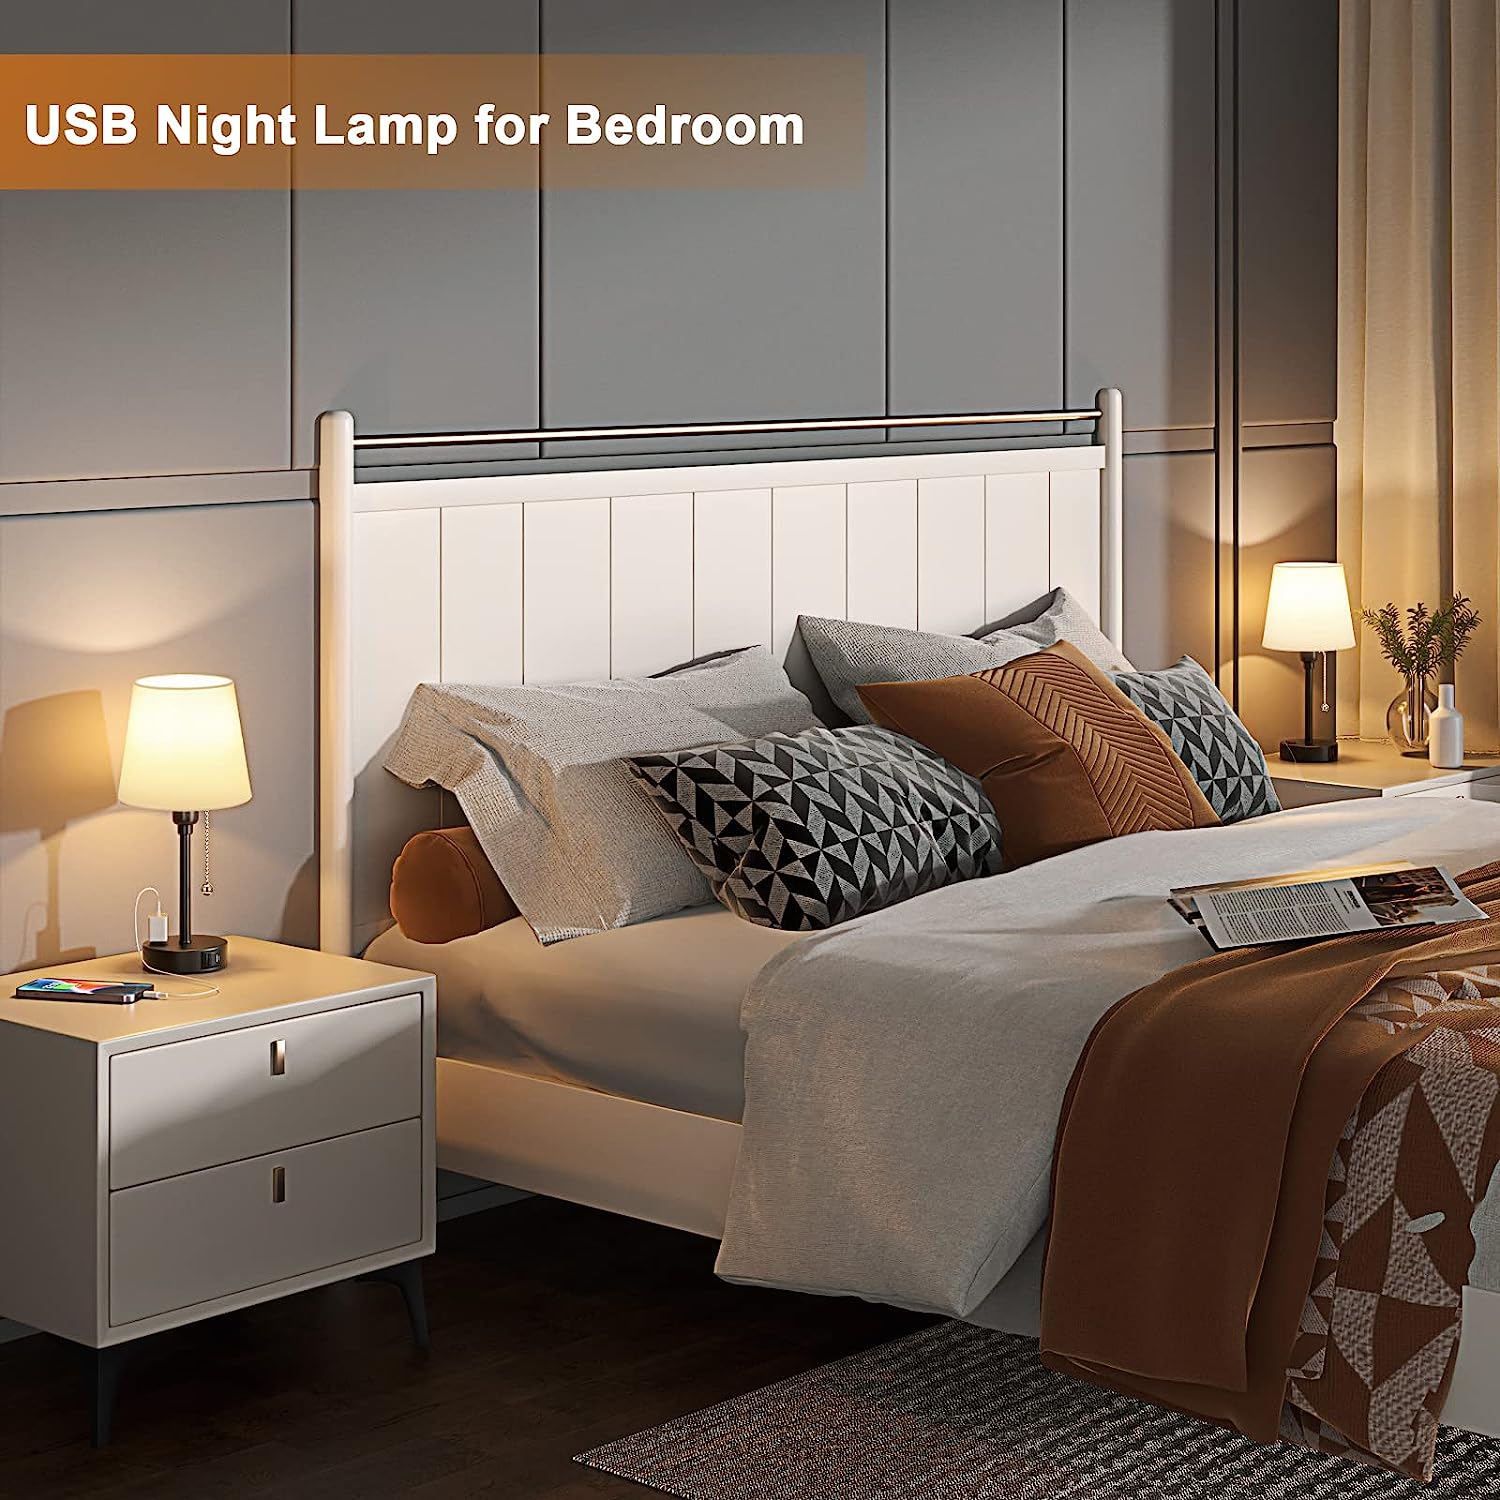 3 Color Modes Bedside Lamps